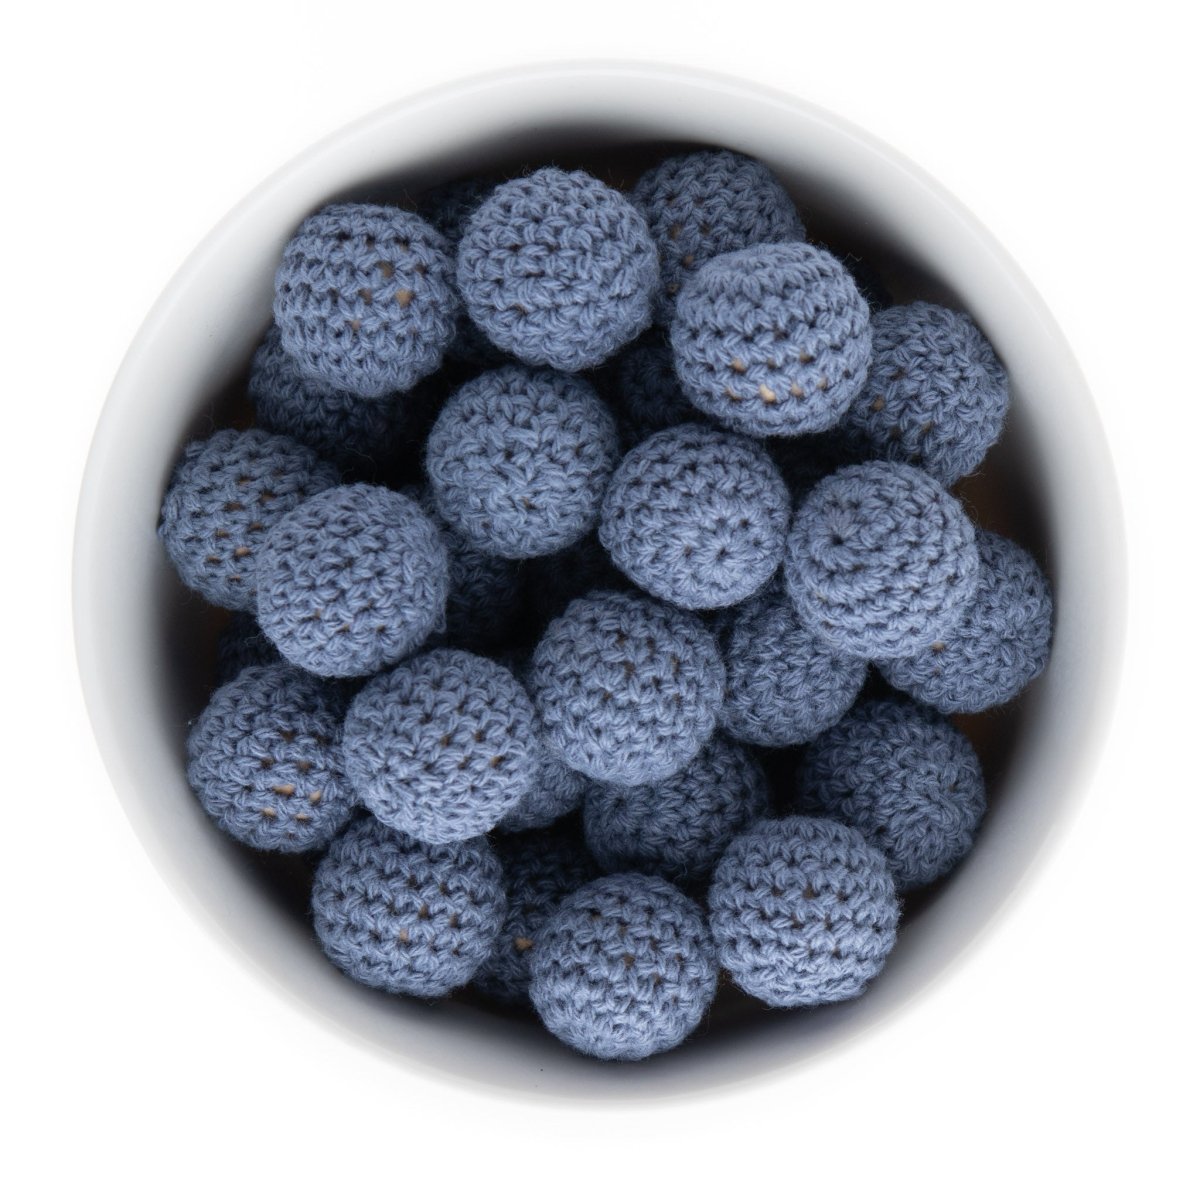 Felt & Crochet Beads 20mm Crochet Beads Smokey Blue from Cara & Co Craft Supply